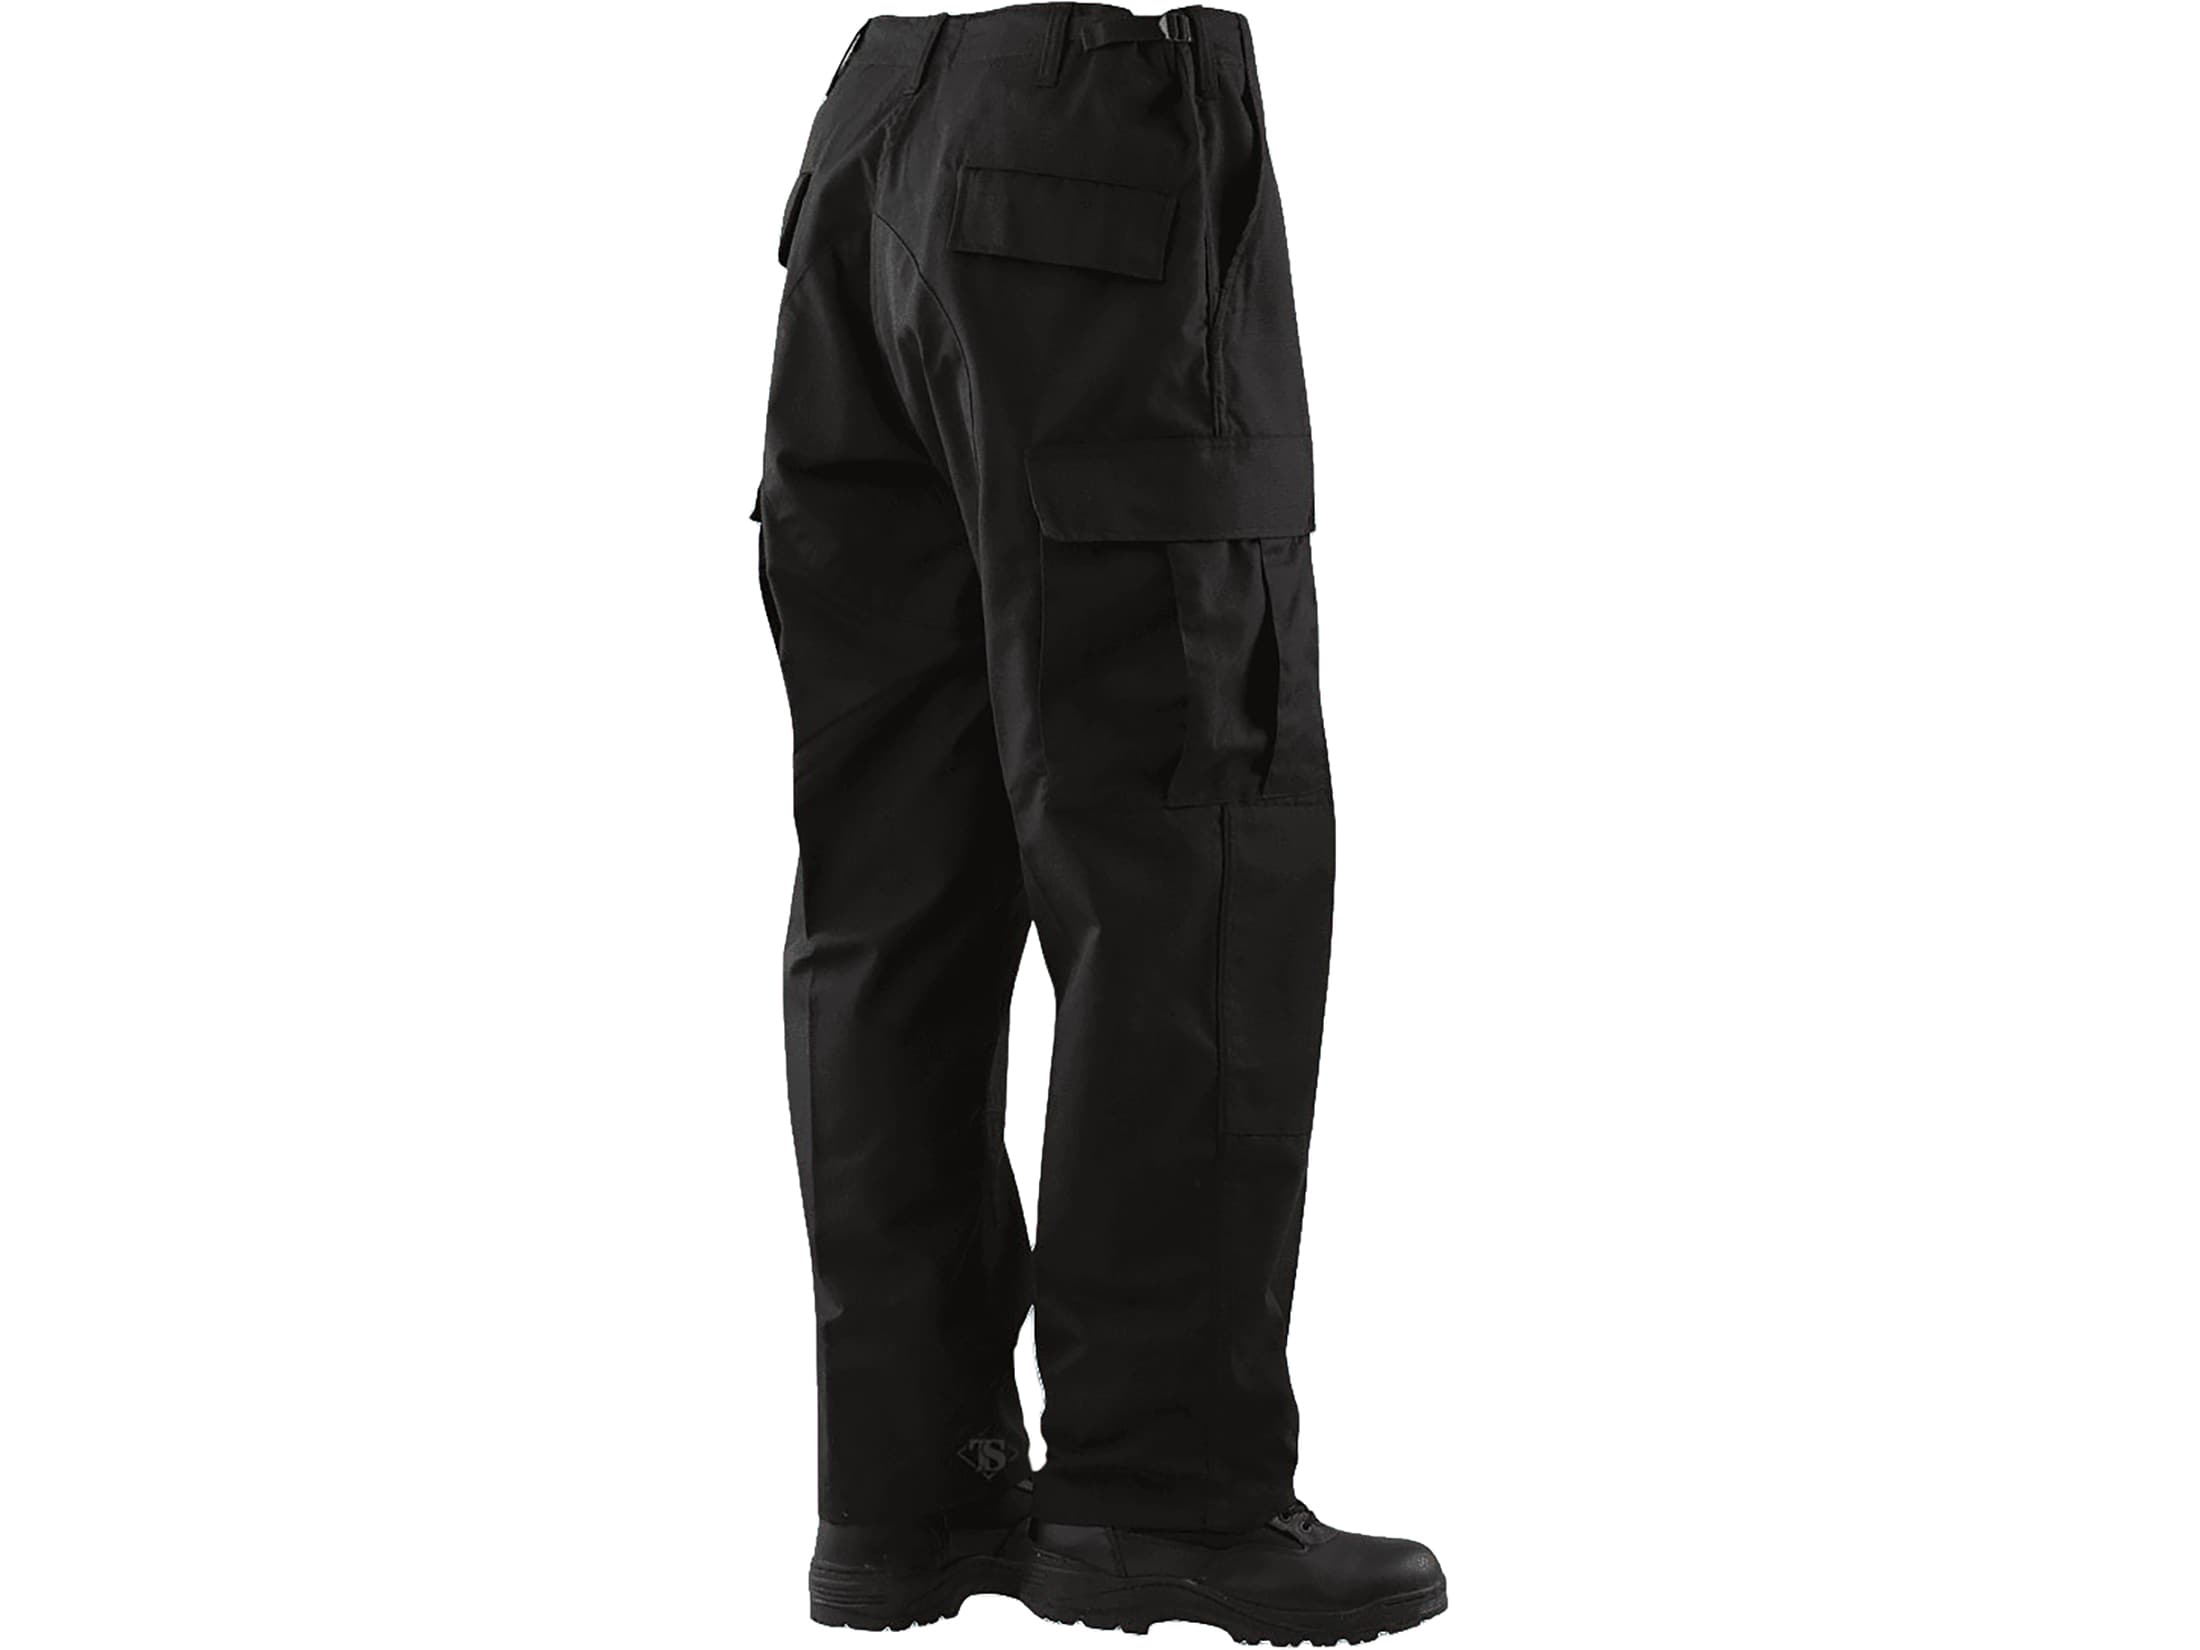 Tru-Spec Men's Cotton Ripstop Classic BDU Pants Khaki Medium Regular